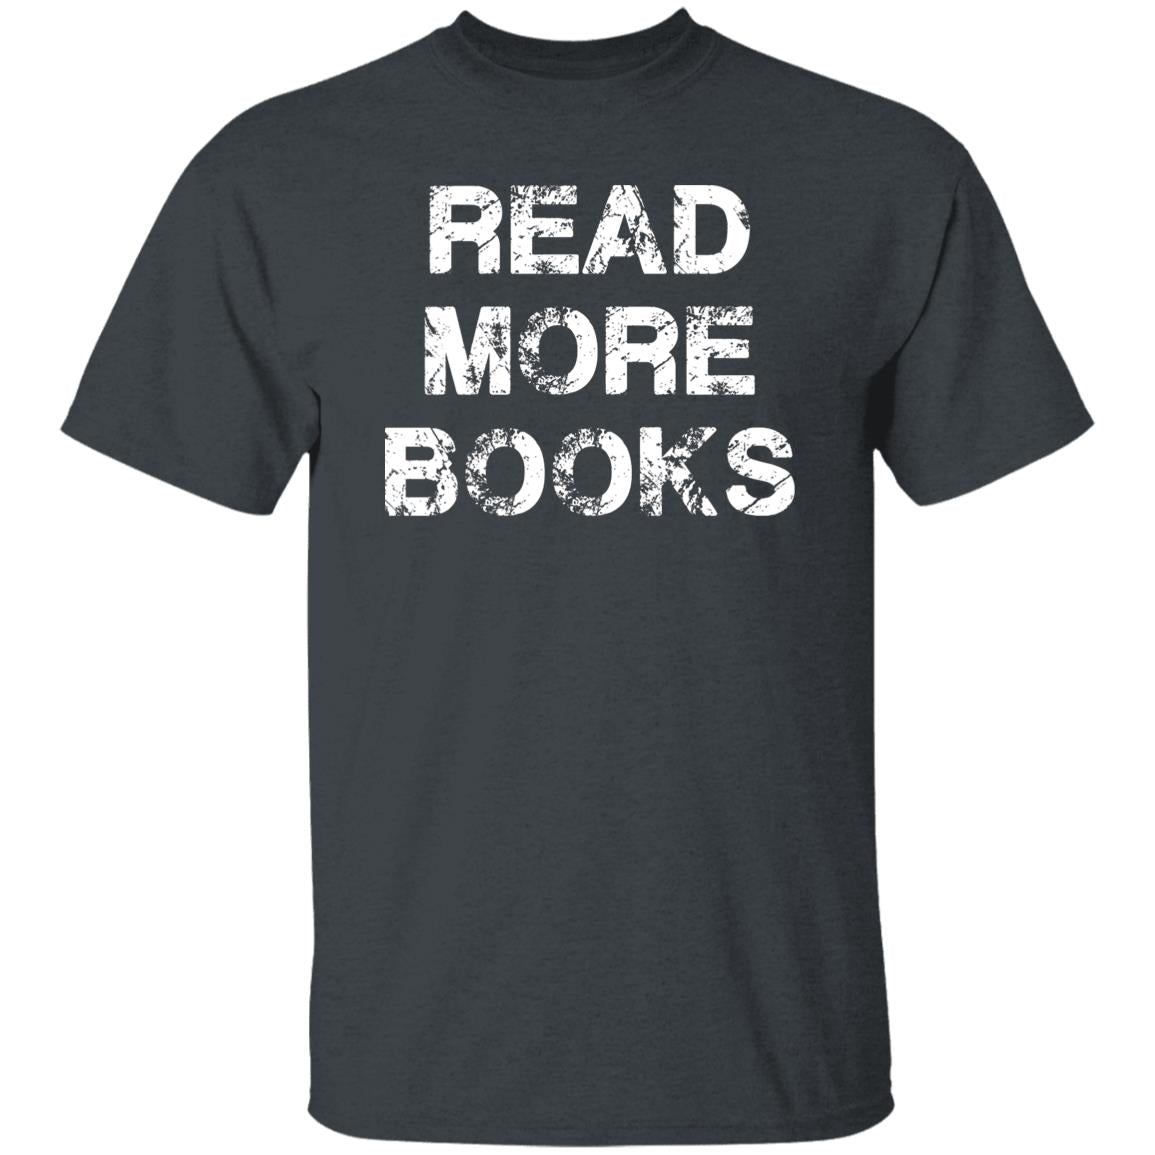 Read more books Unisex T-shirt Book lover, teacher tee black dark heather-Dark Heather-Family-Gift-Planet